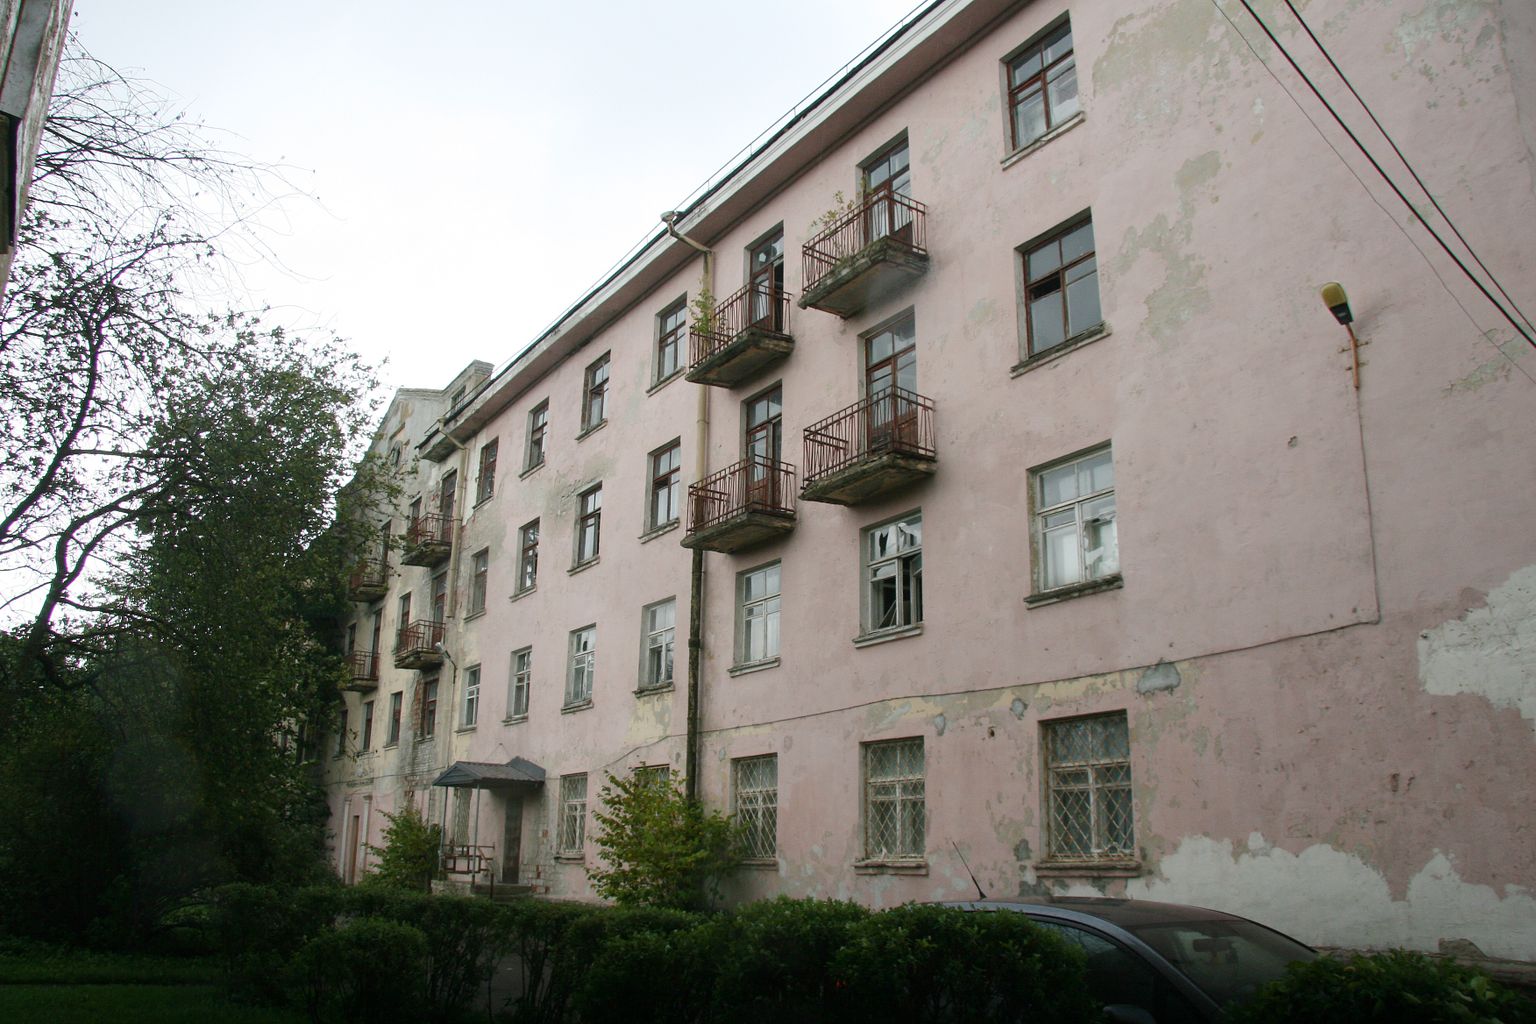 Дом с пустующими квартирами в Кохтла-Ярве. Снимок иллюстративный.